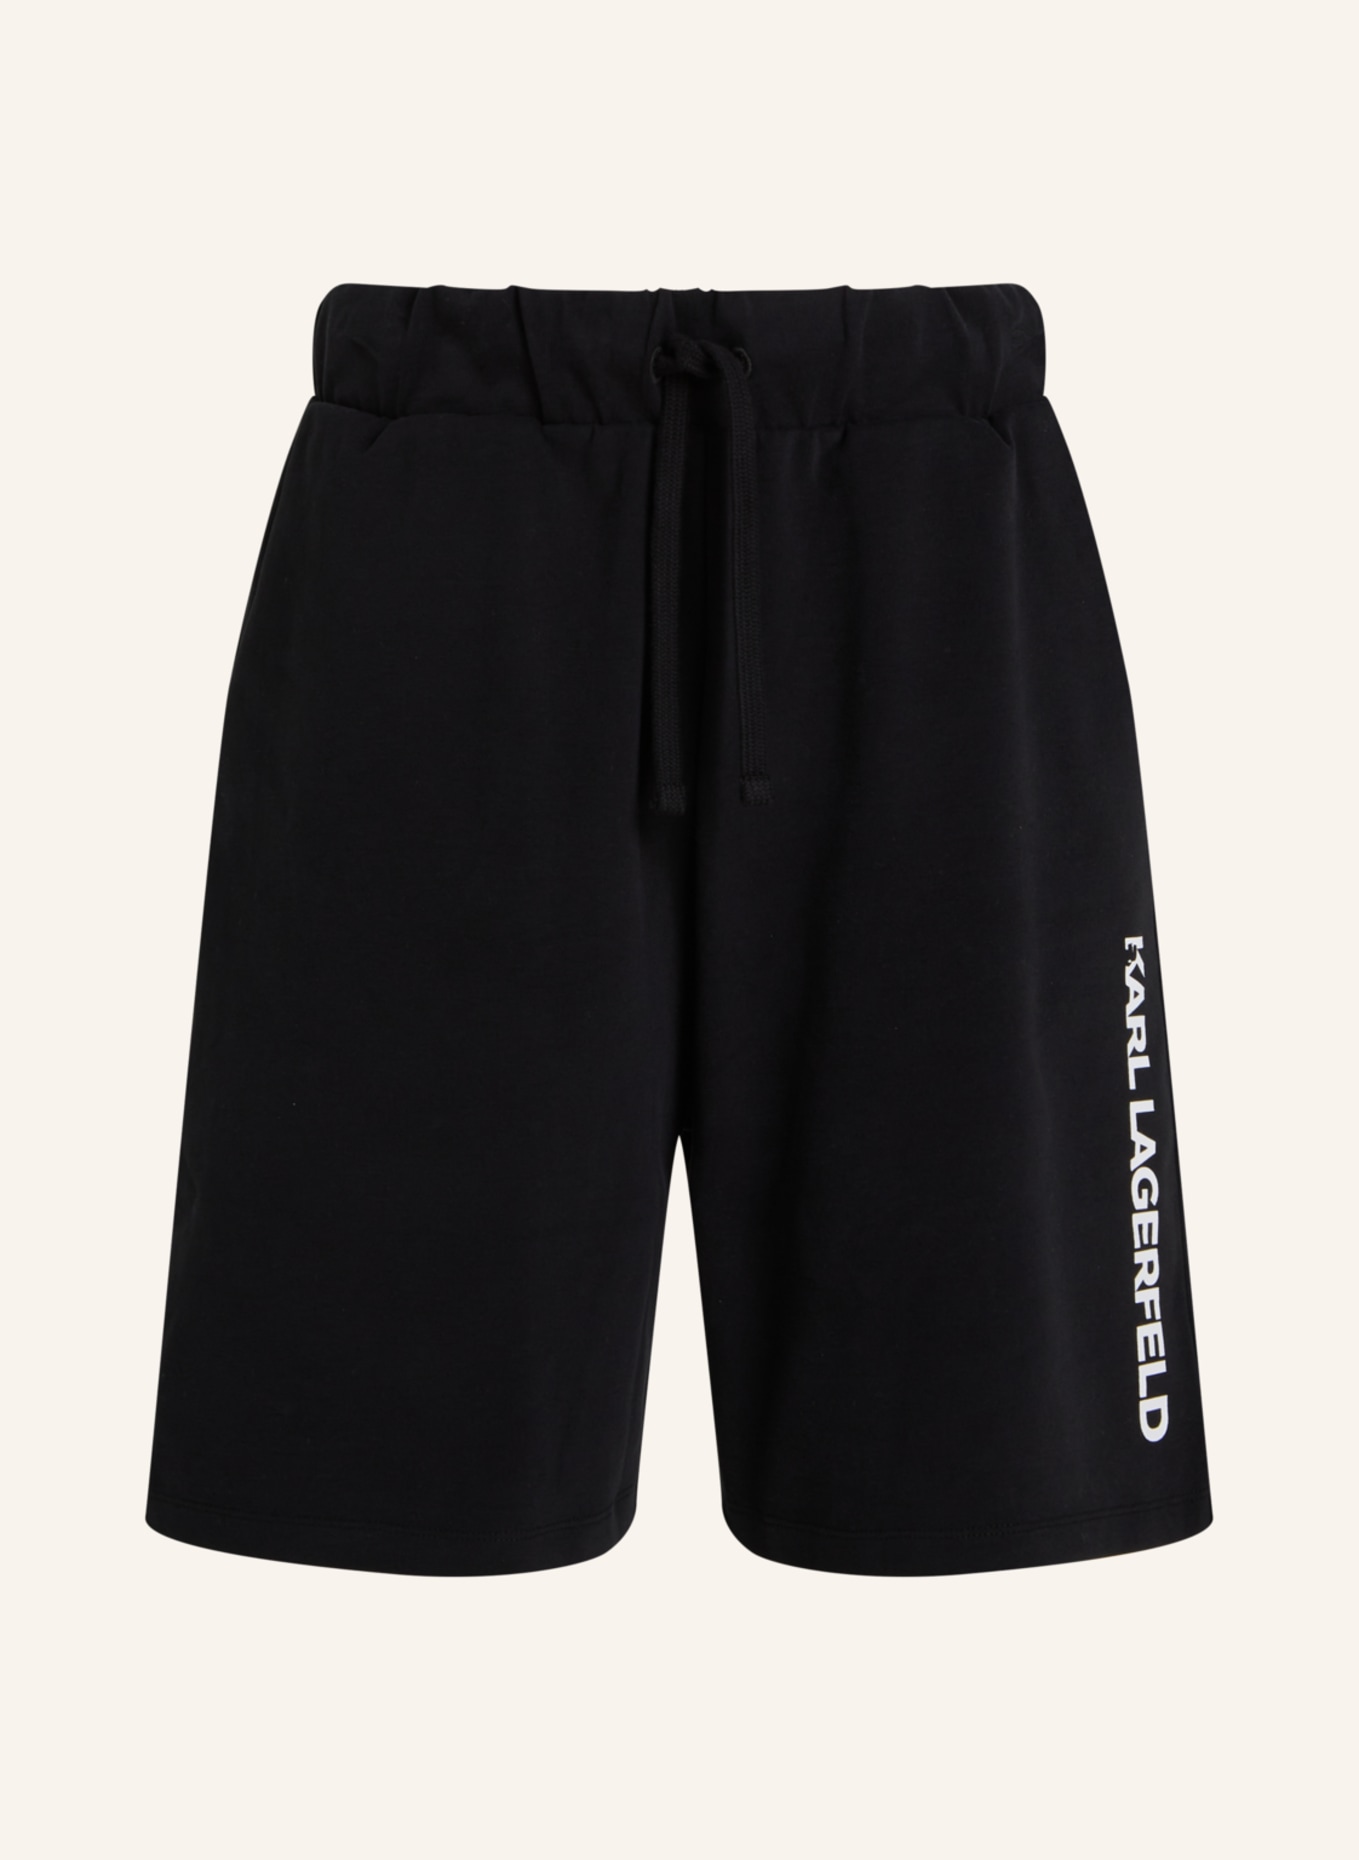 KARL LAGERFELD Shorts, Farbe: SCHWARZ (Bild 1)